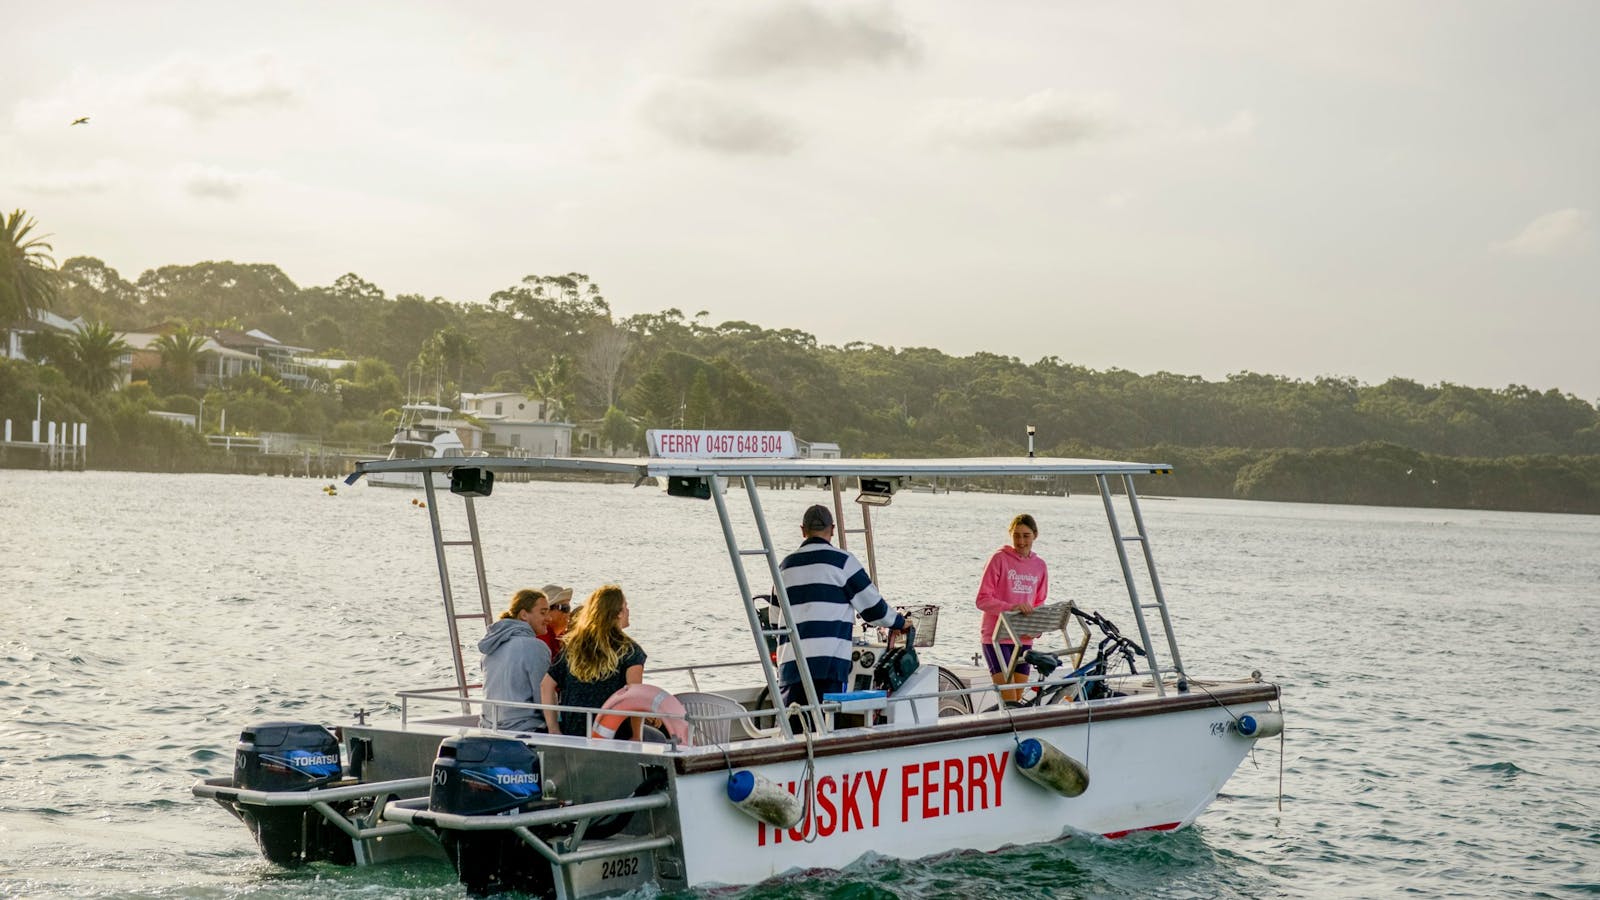 Husky Ferry